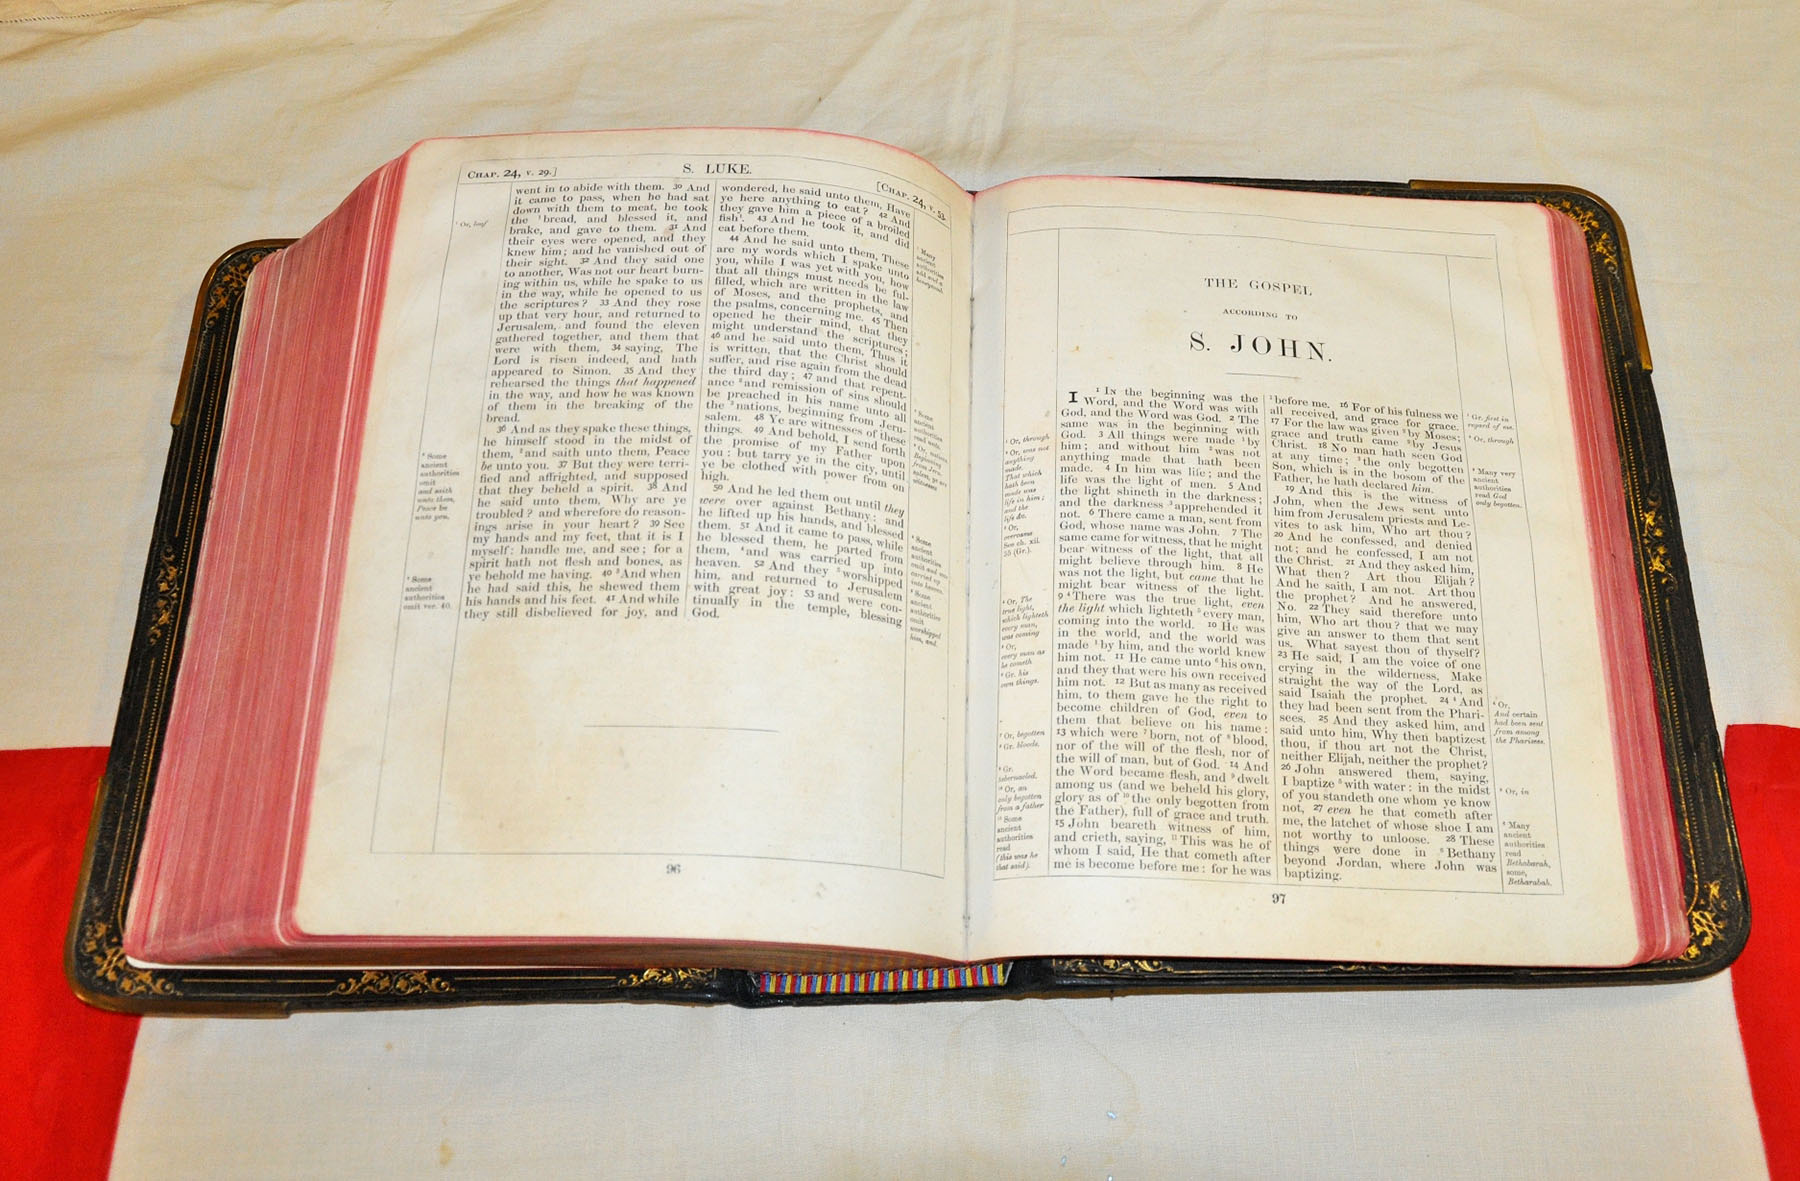 The Re-Dedication of the Sacryham Preceptory Bible